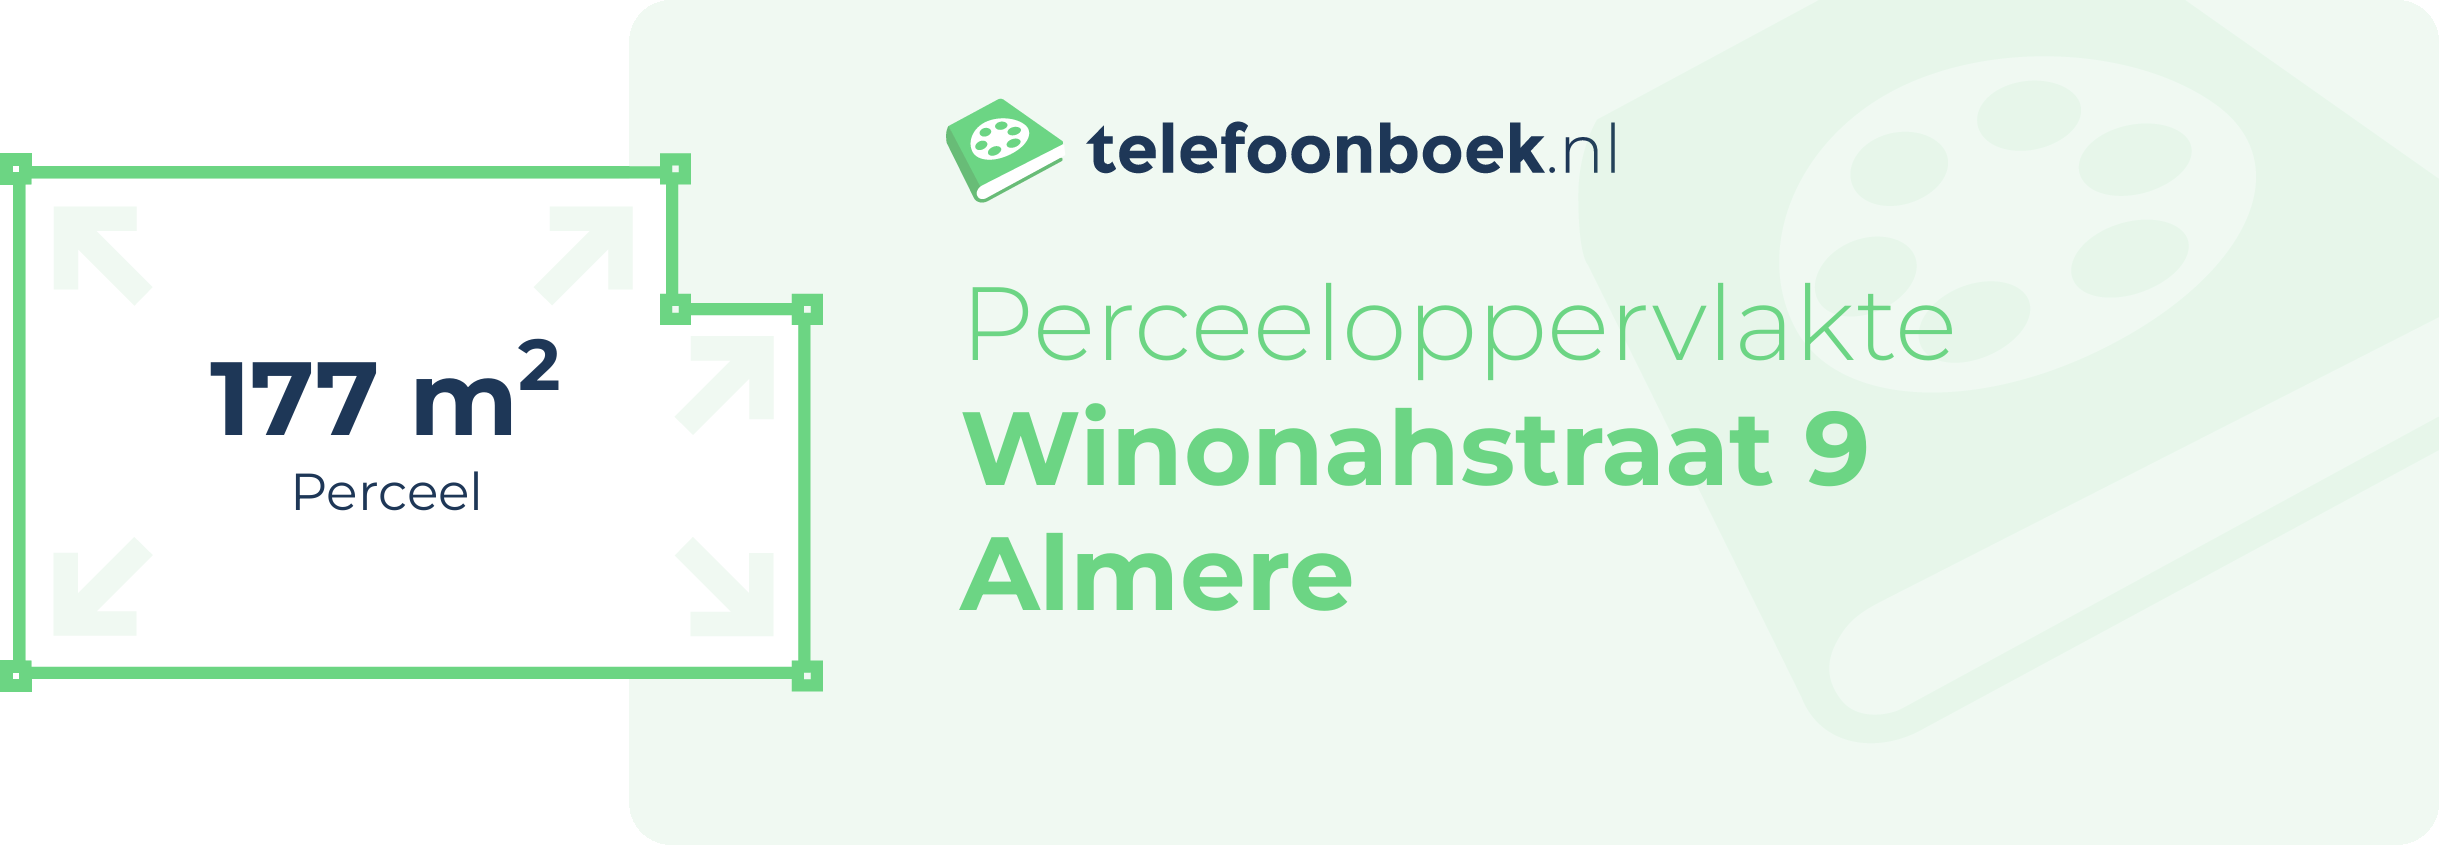 Perceeloppervlakte Winonahstraat 9 Almere